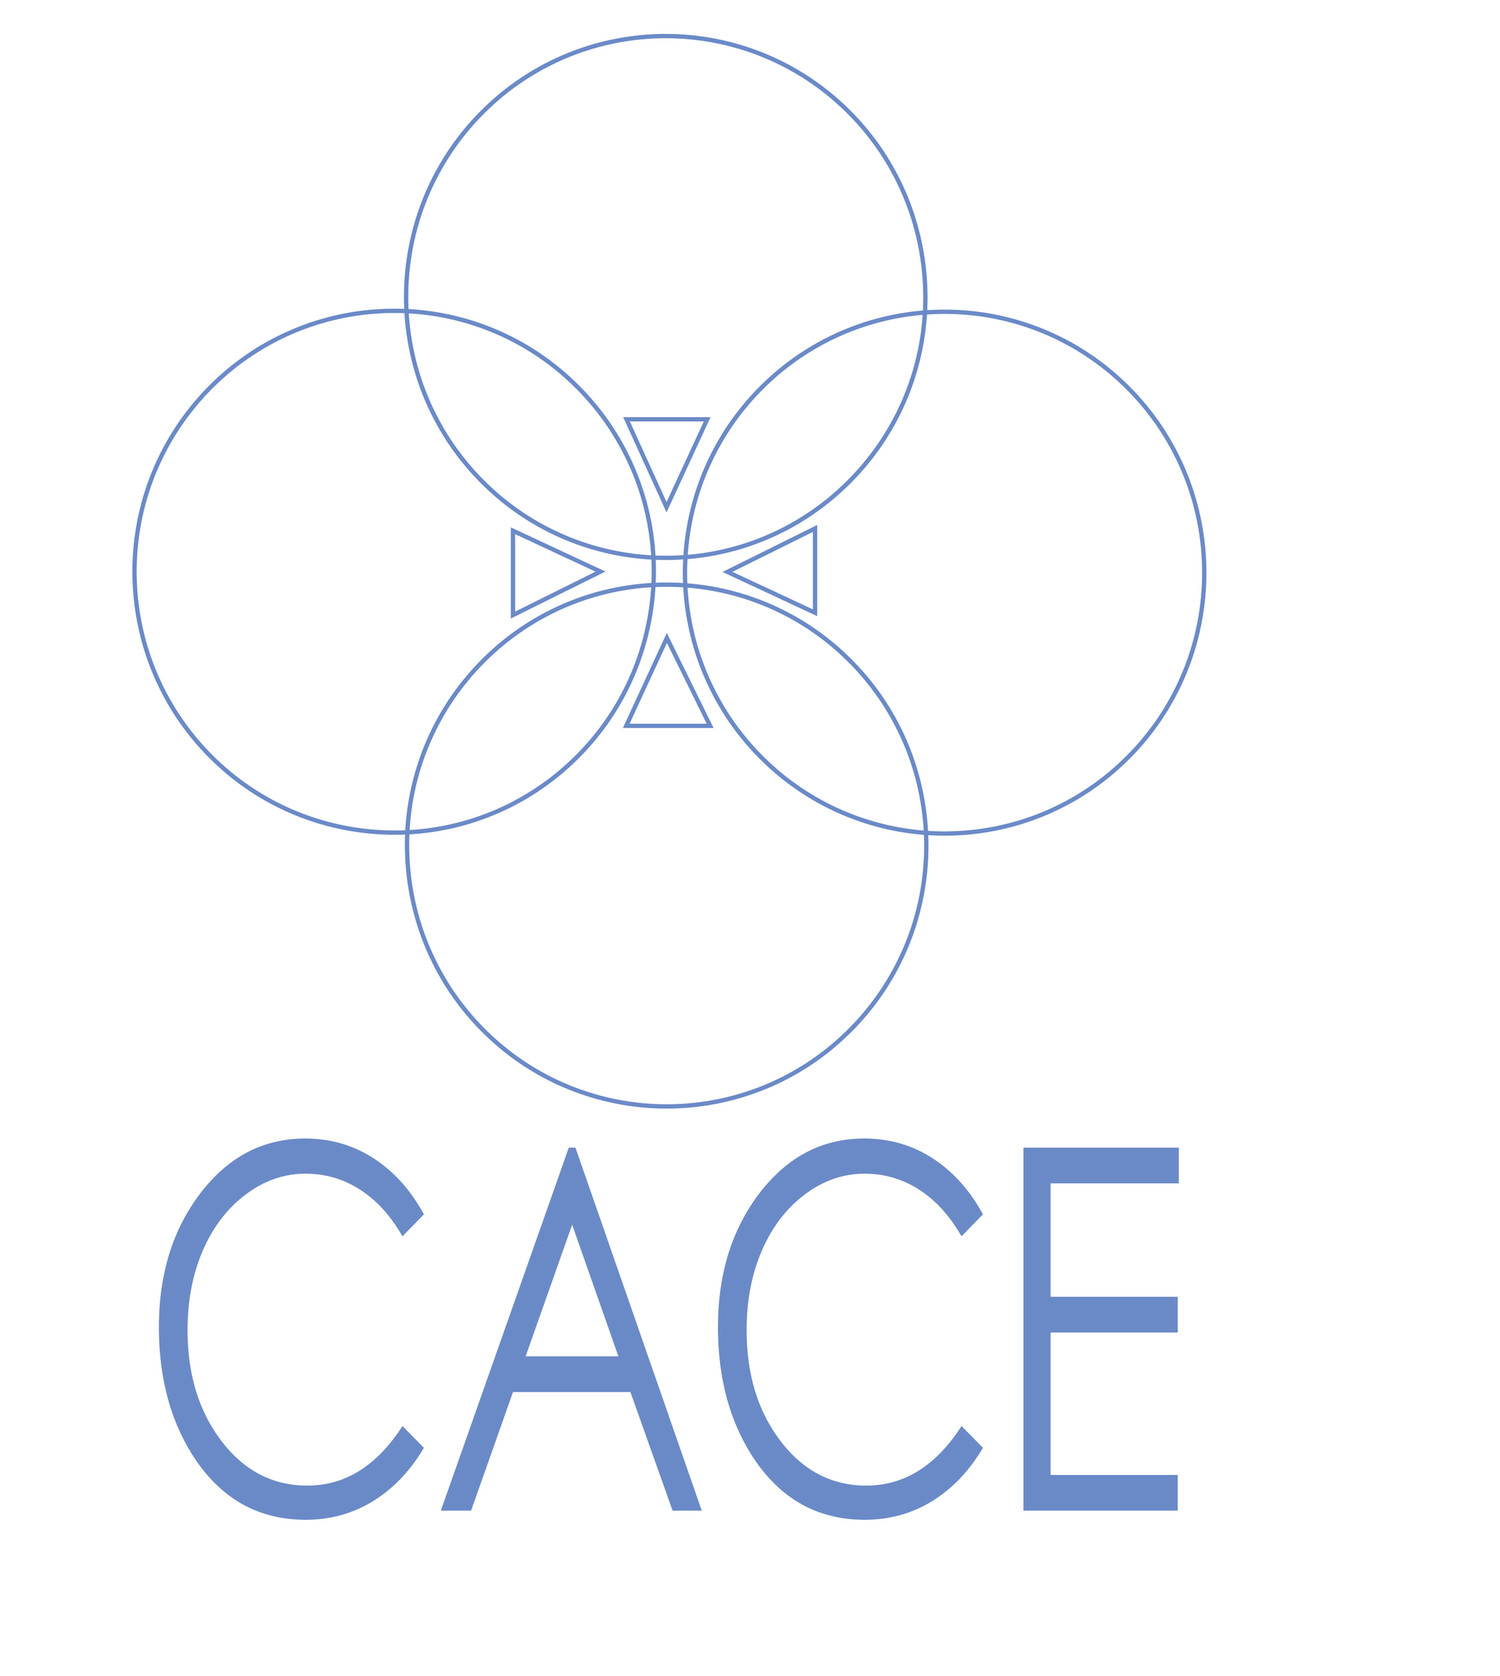 CACE-logo-2.jpg